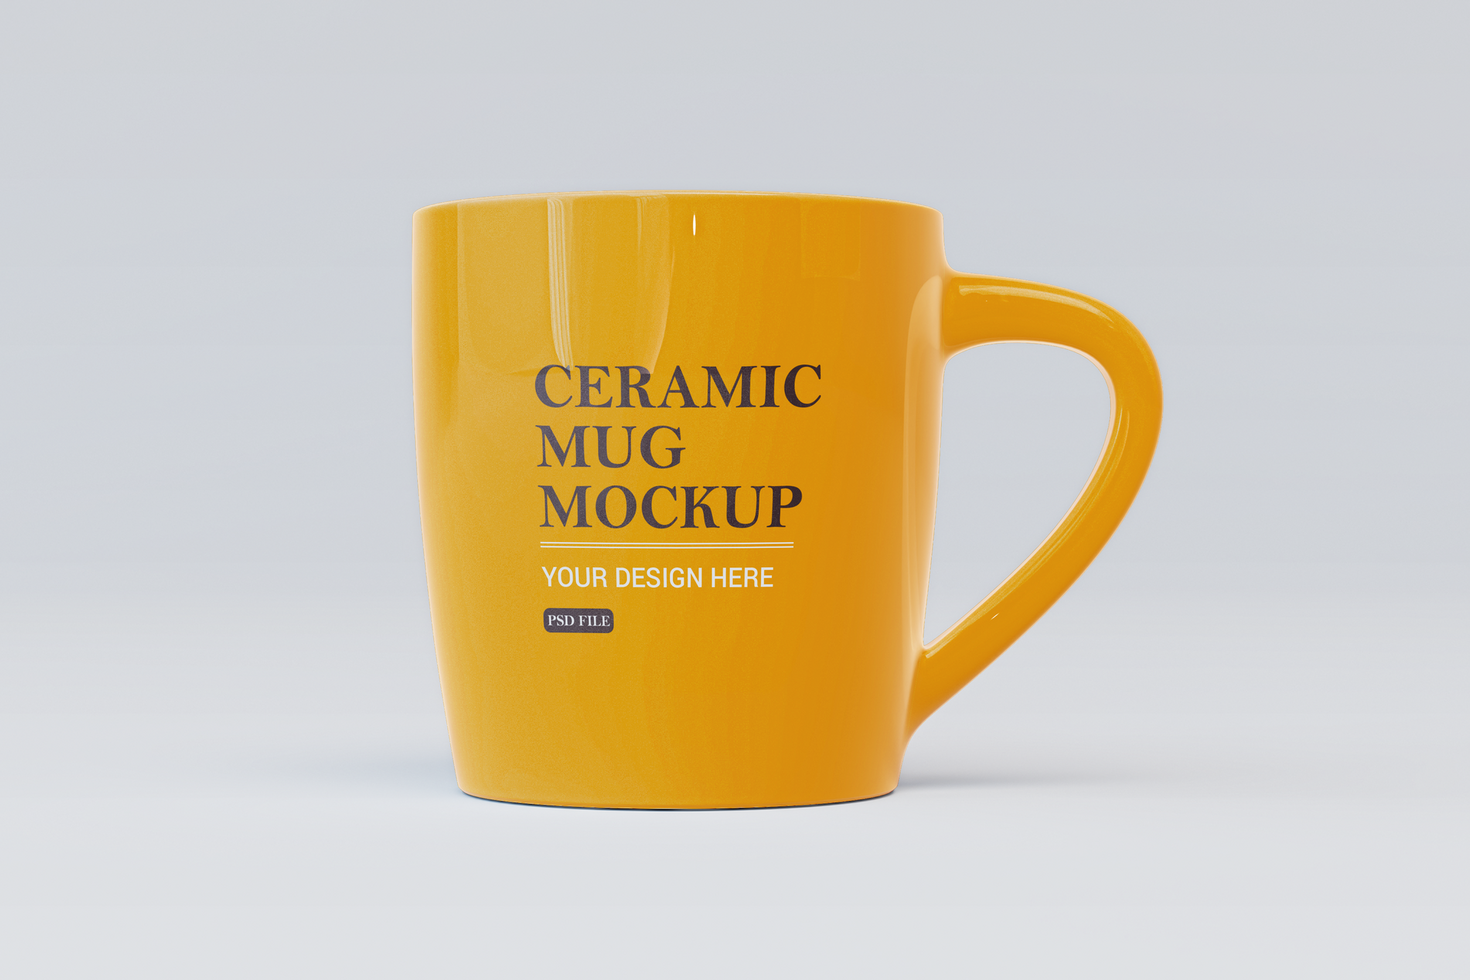 Ceramic mug mockup on a white background psd